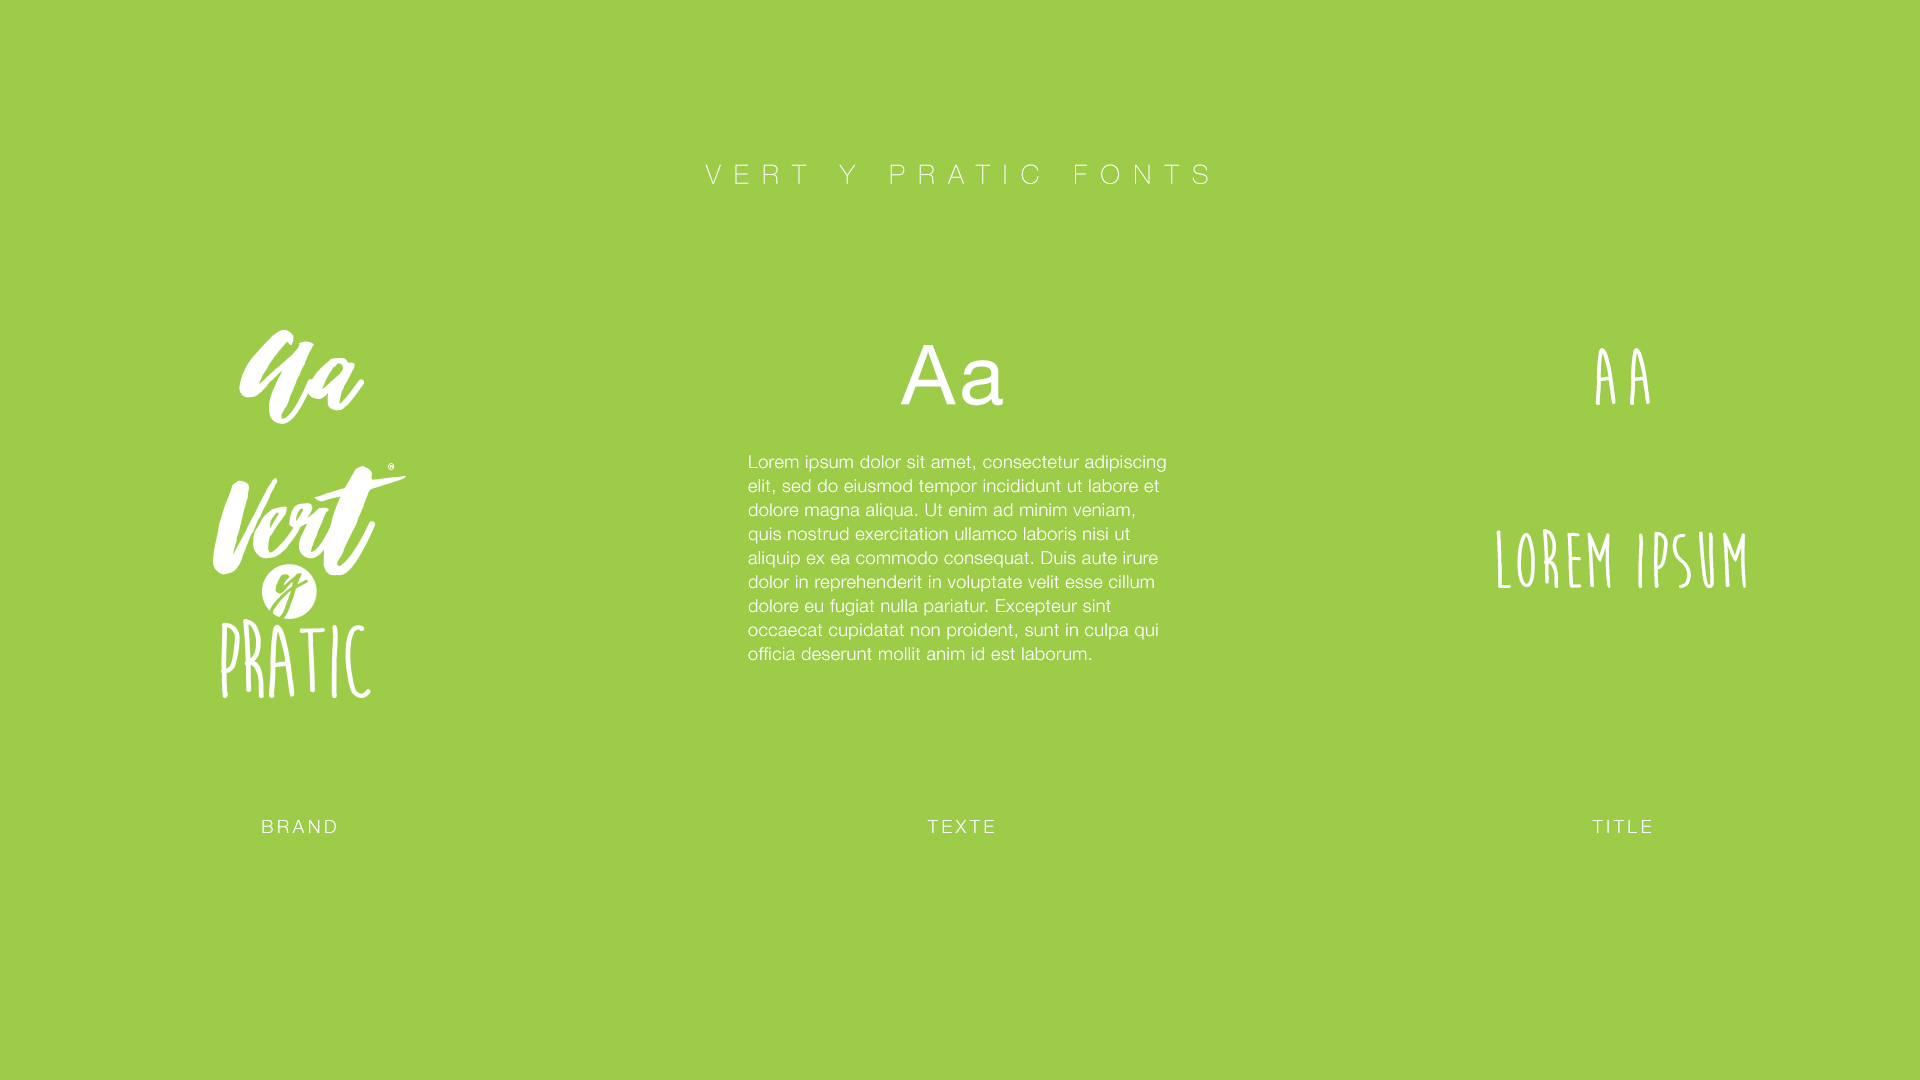 Typographies charte graphique Vert y Pratic